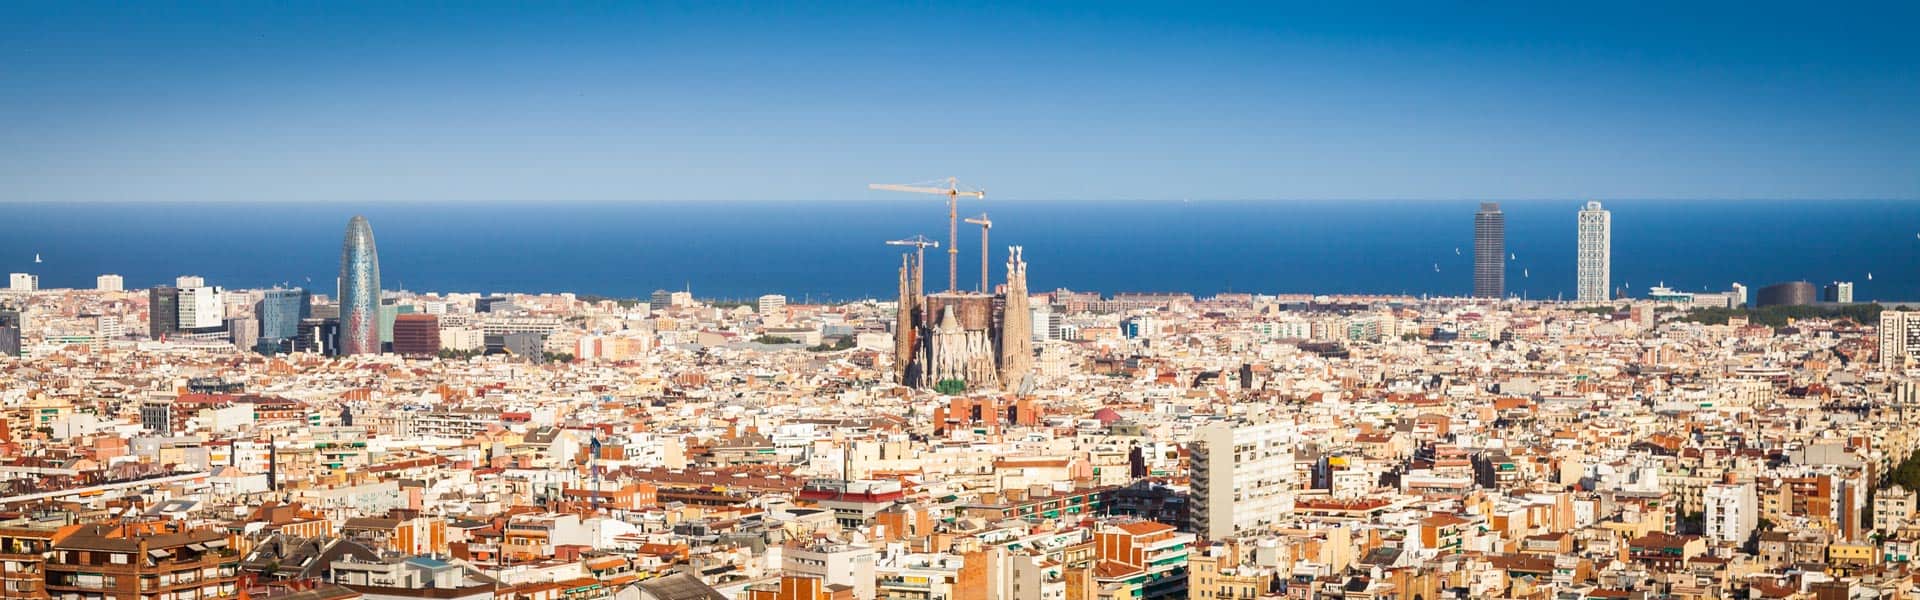 Heilige Stätte: die Sagrada Familia in Barcelona